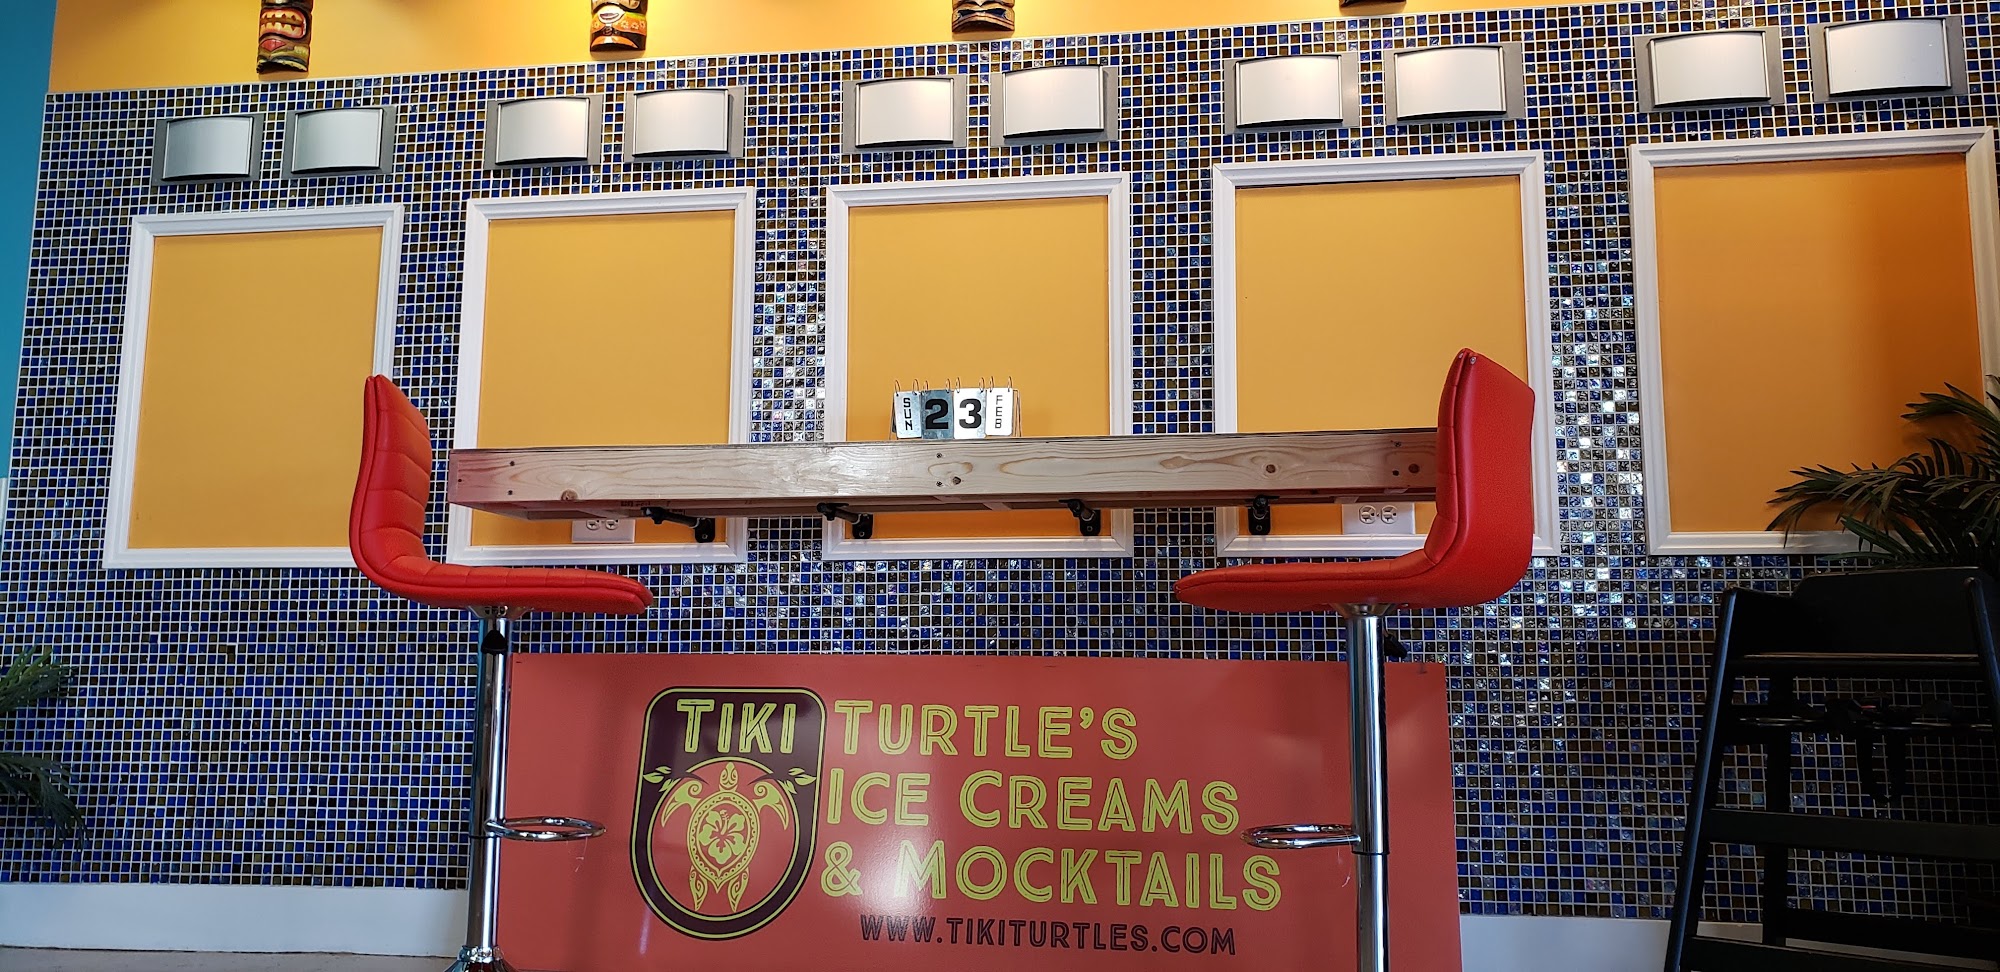 Tiki Turtle's Boba Teas and Drinks